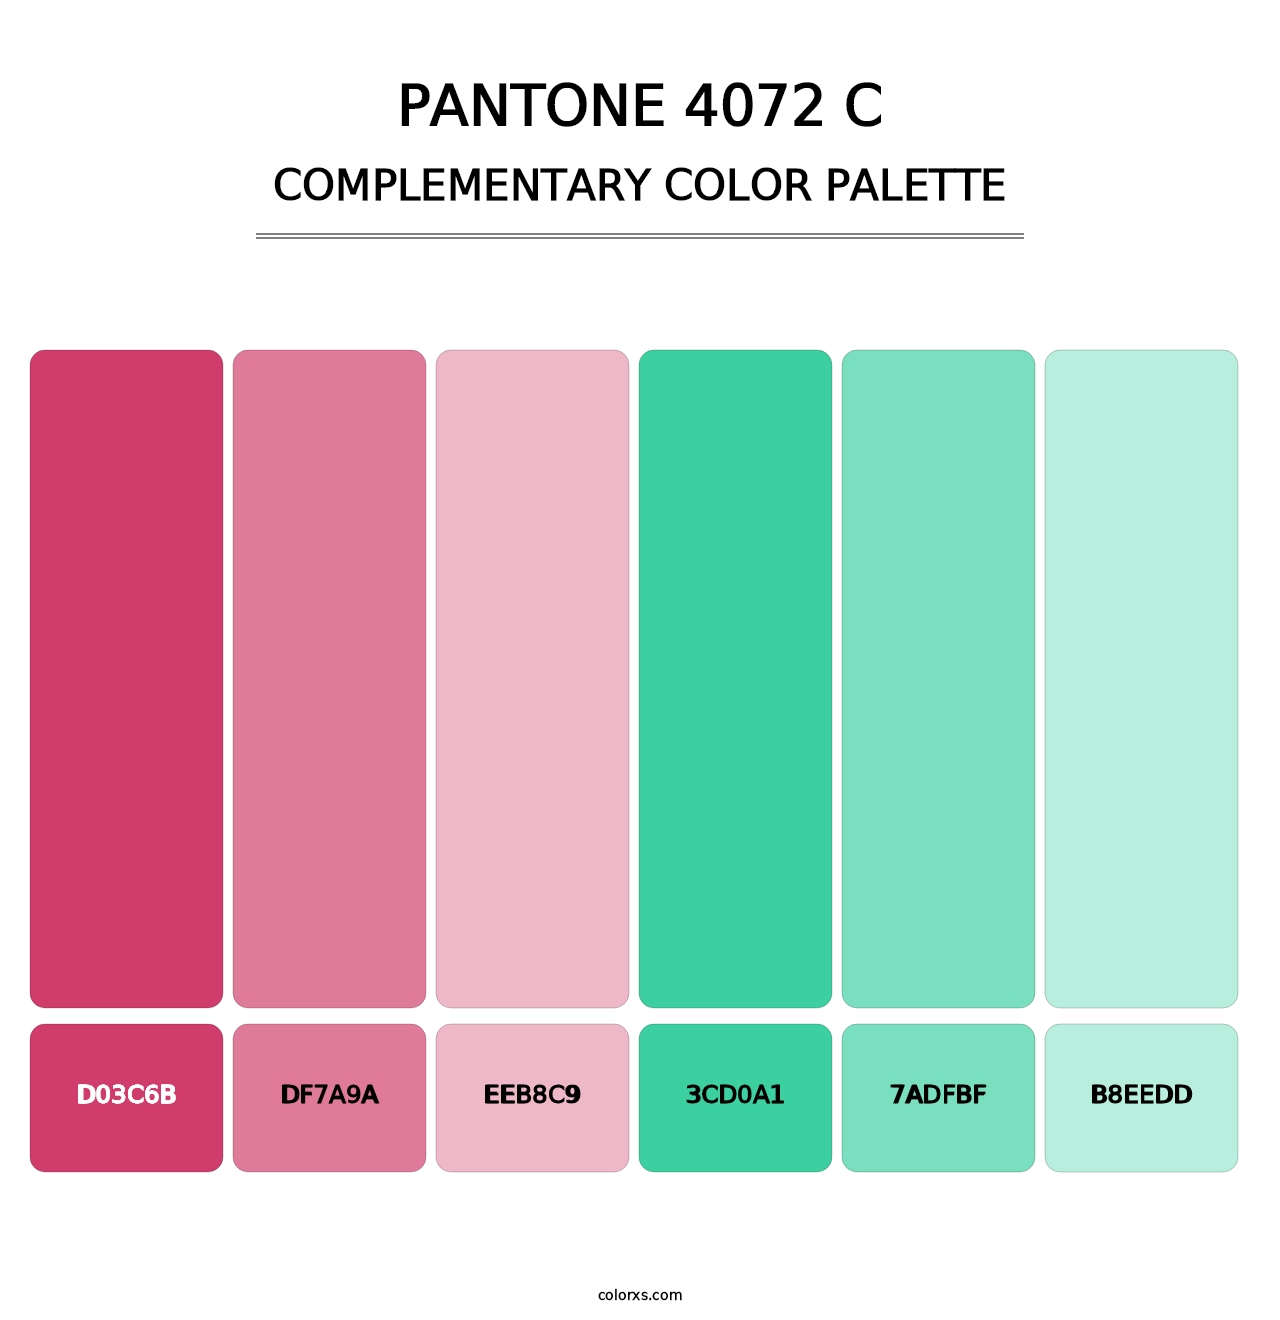 PANTONE 4072 C - Complementary Color Palette